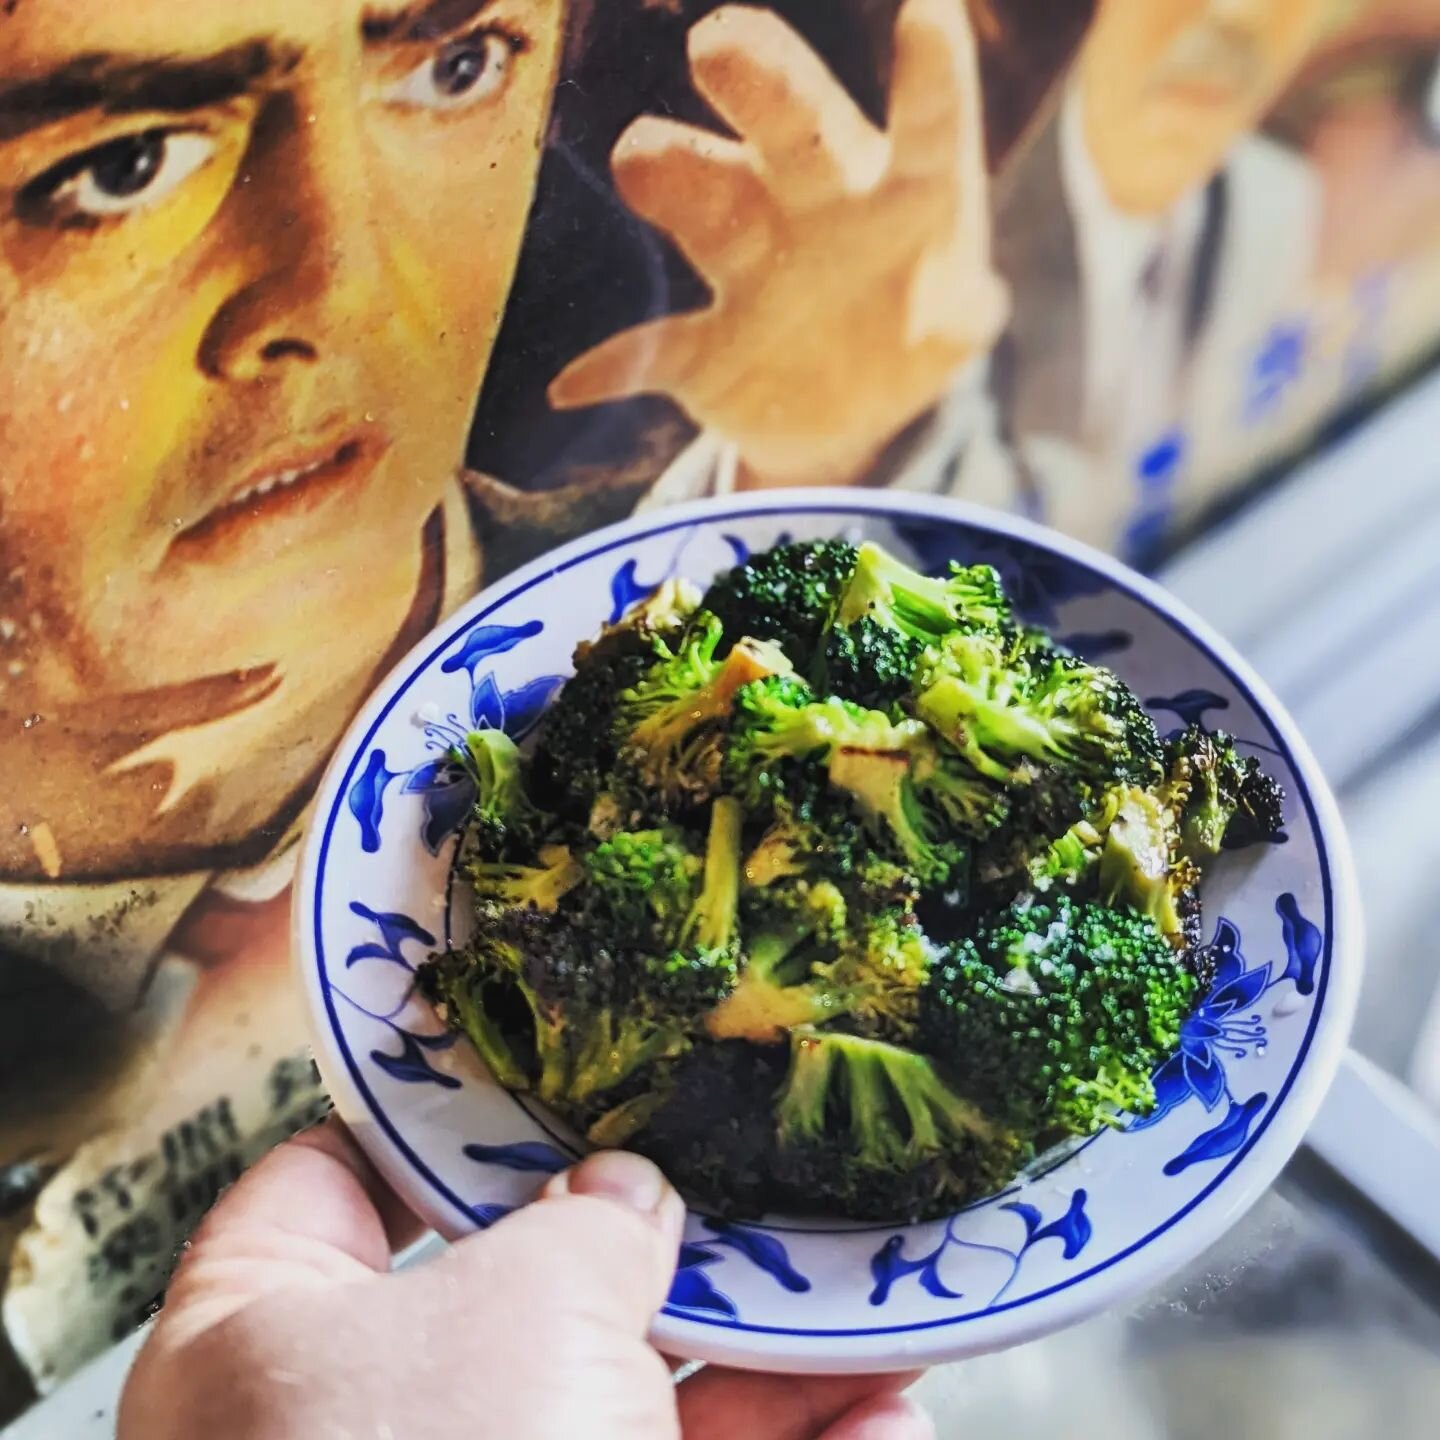 Gotta get those greens in your diet! #broccoli #vegitarianfood #vegi #vegitarian #vegitables #eatyourveggies